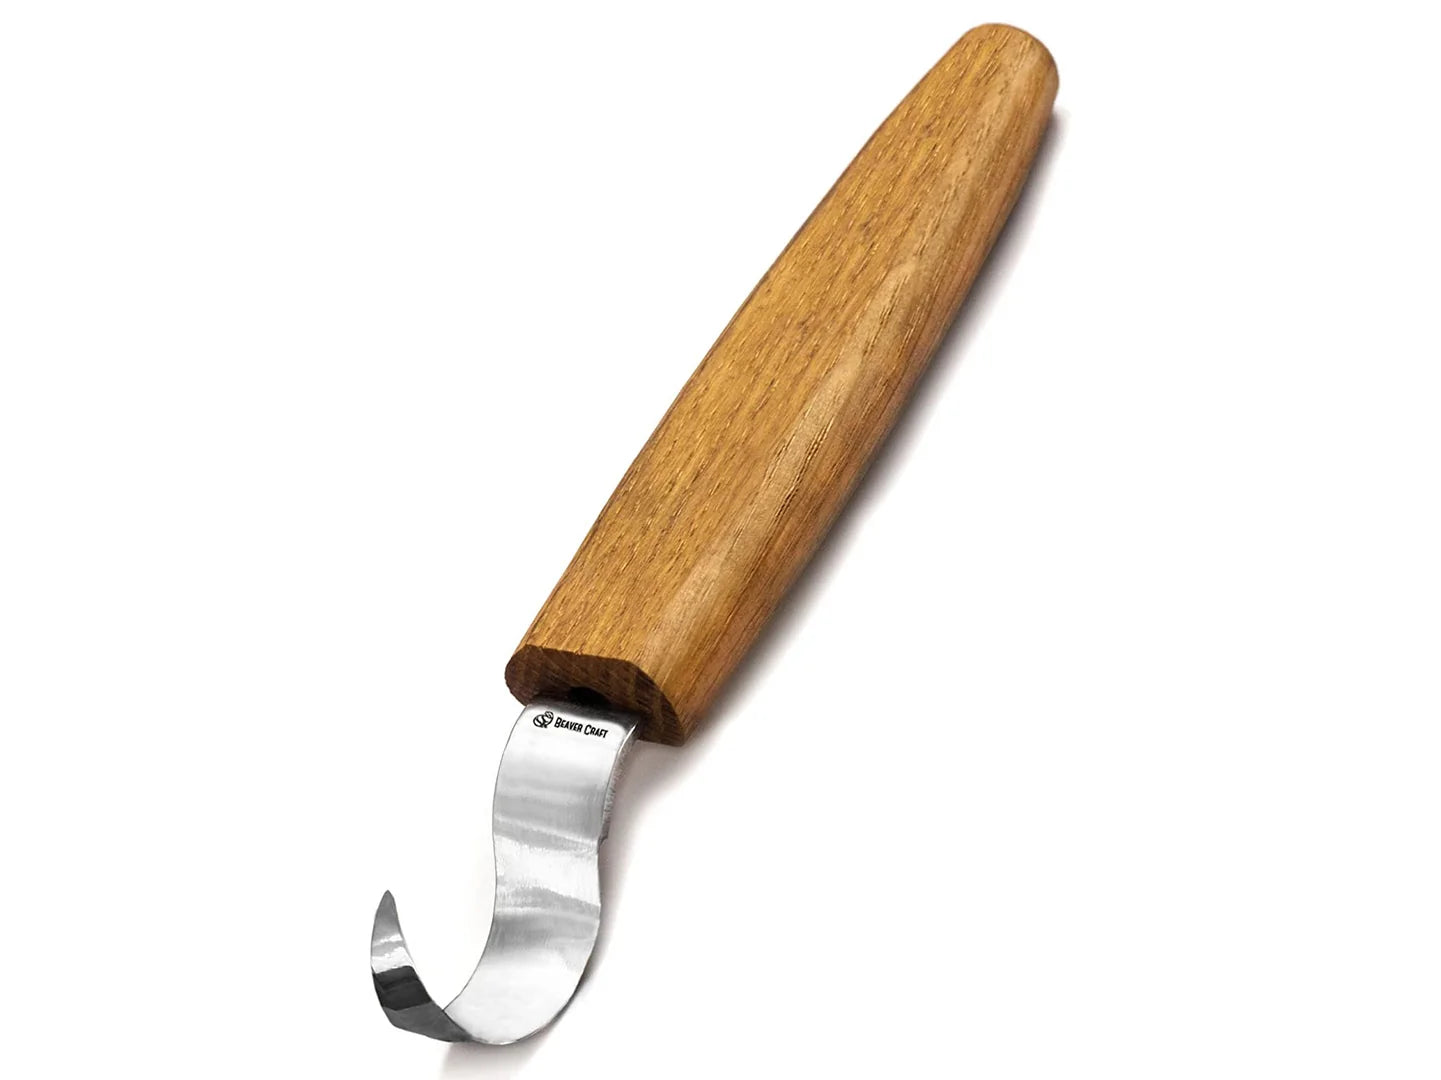 Buy left handed spoon carving hook knife online - BeaverCraft